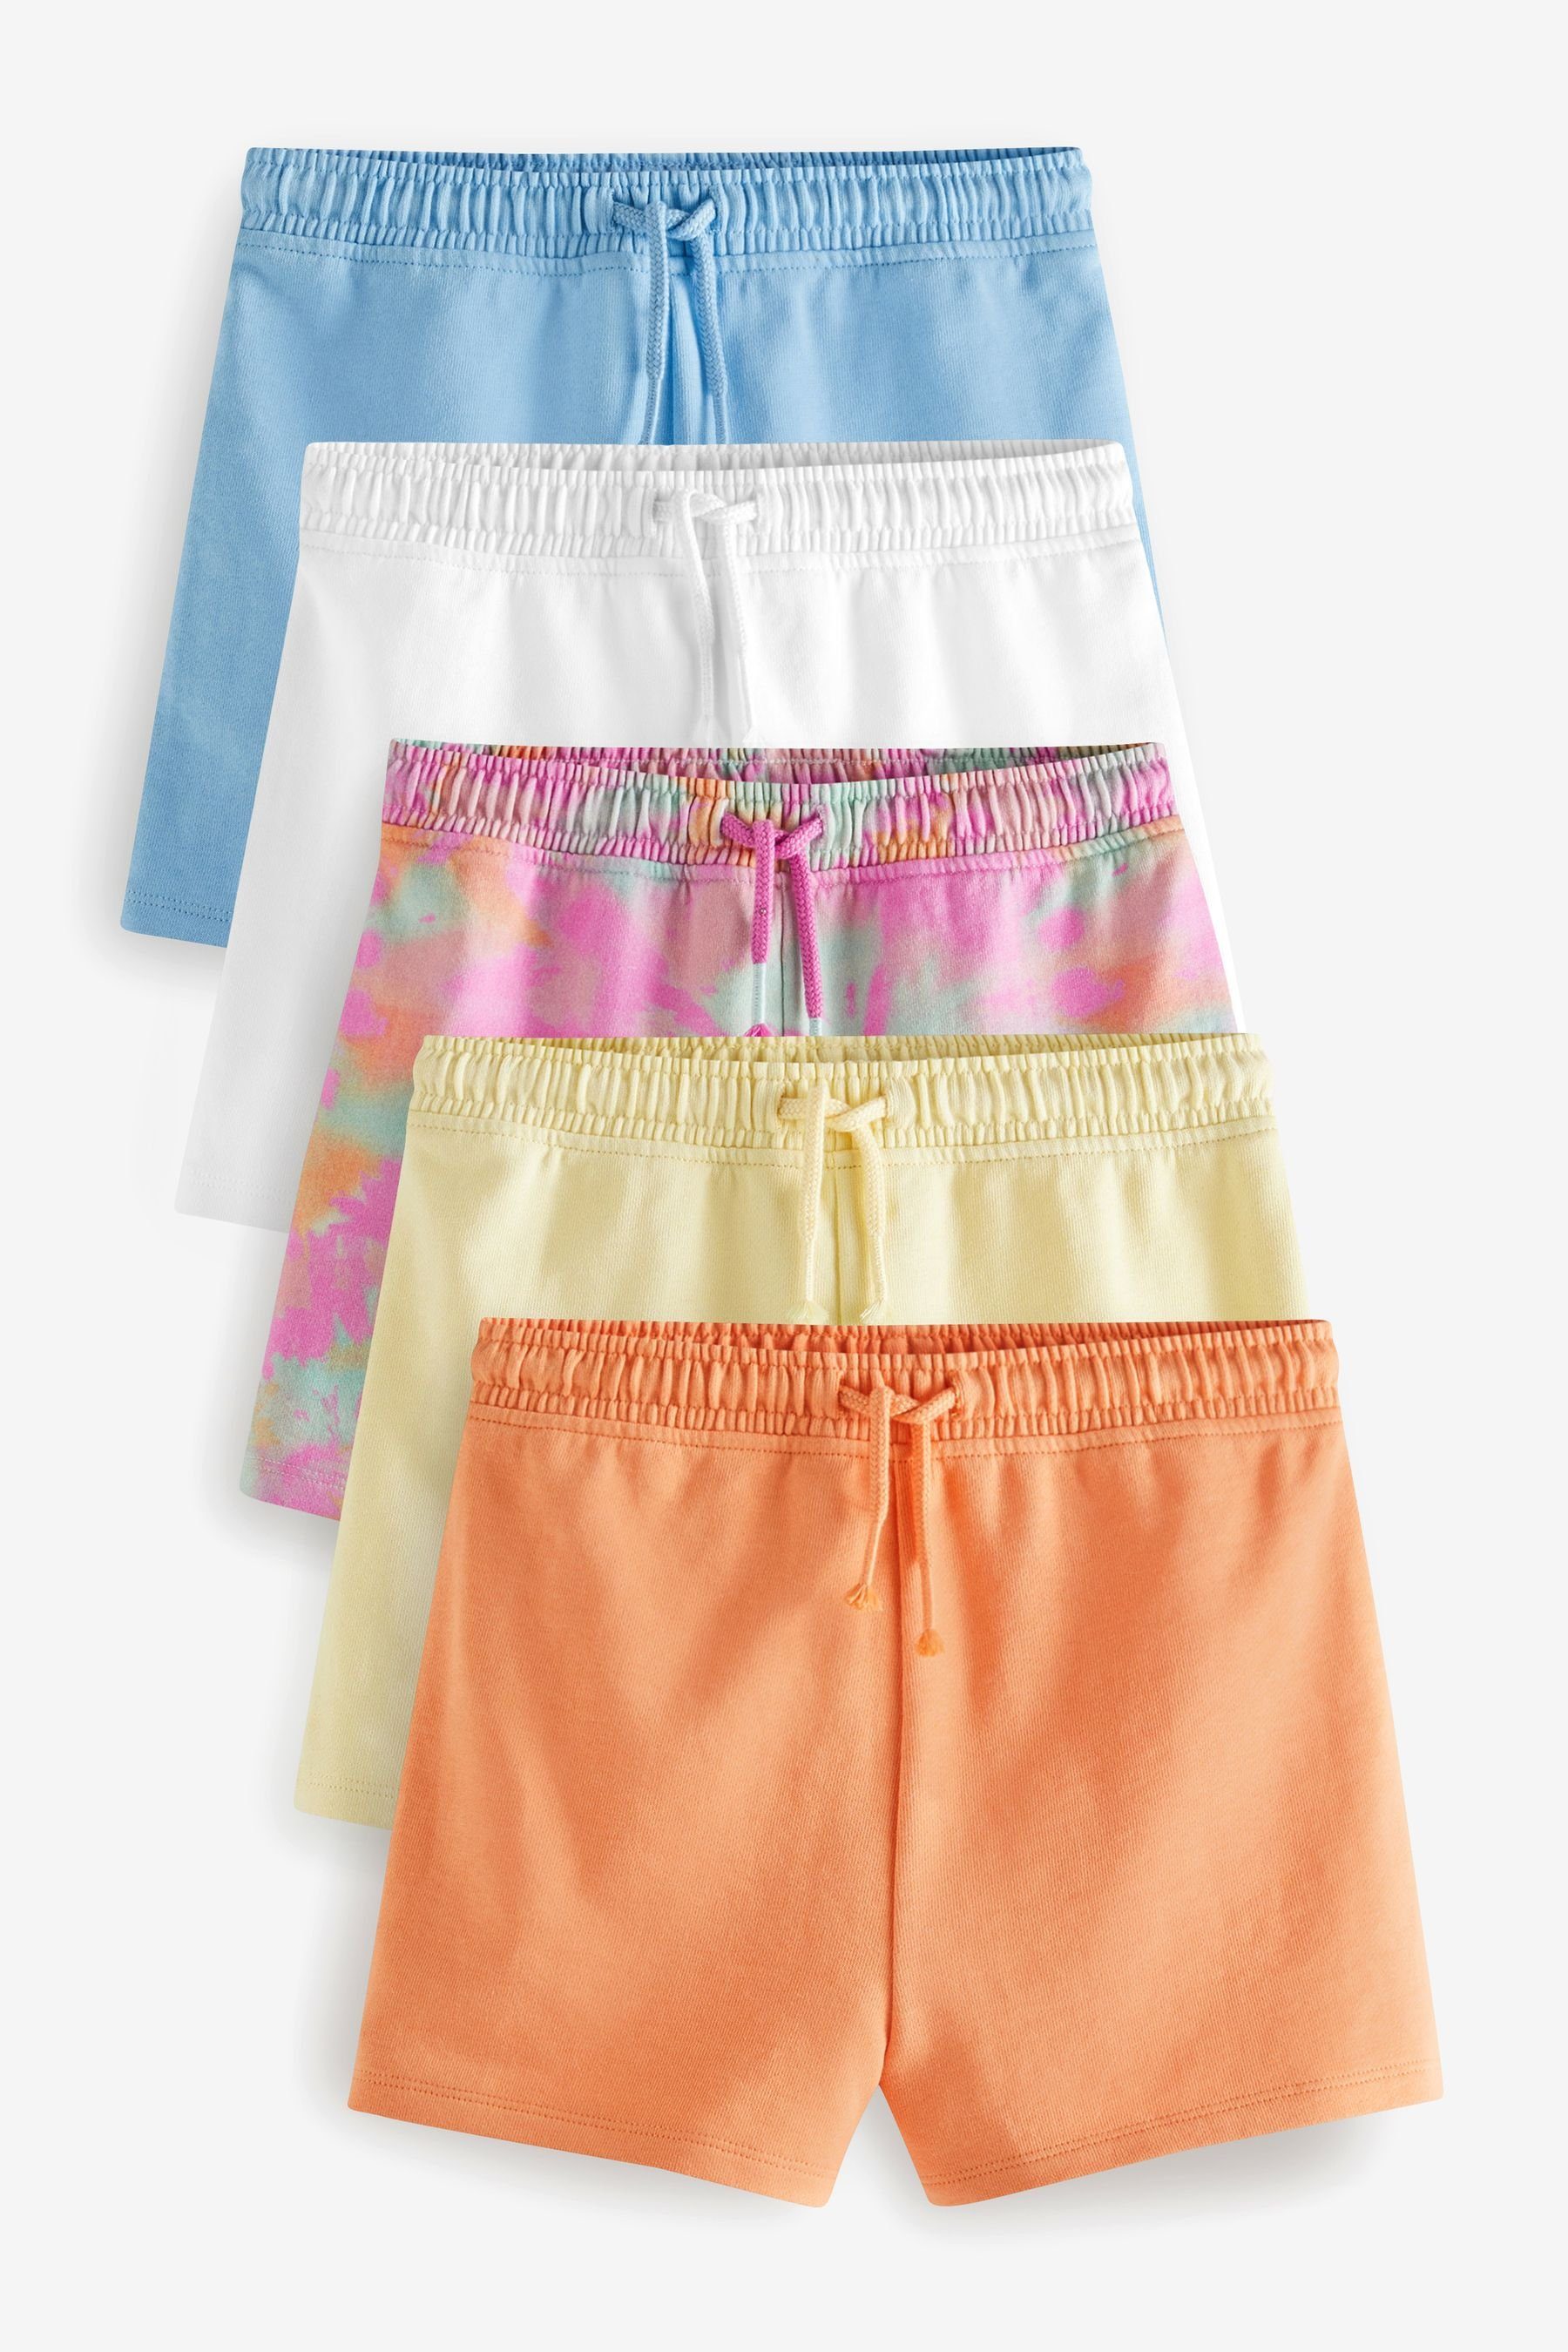 Dye Blue/Pink/Yellow/Tie aus Next Print Pastel Sweatshorts Baumwolle im 5er-Pack (5-tlg) Jerseyshorts